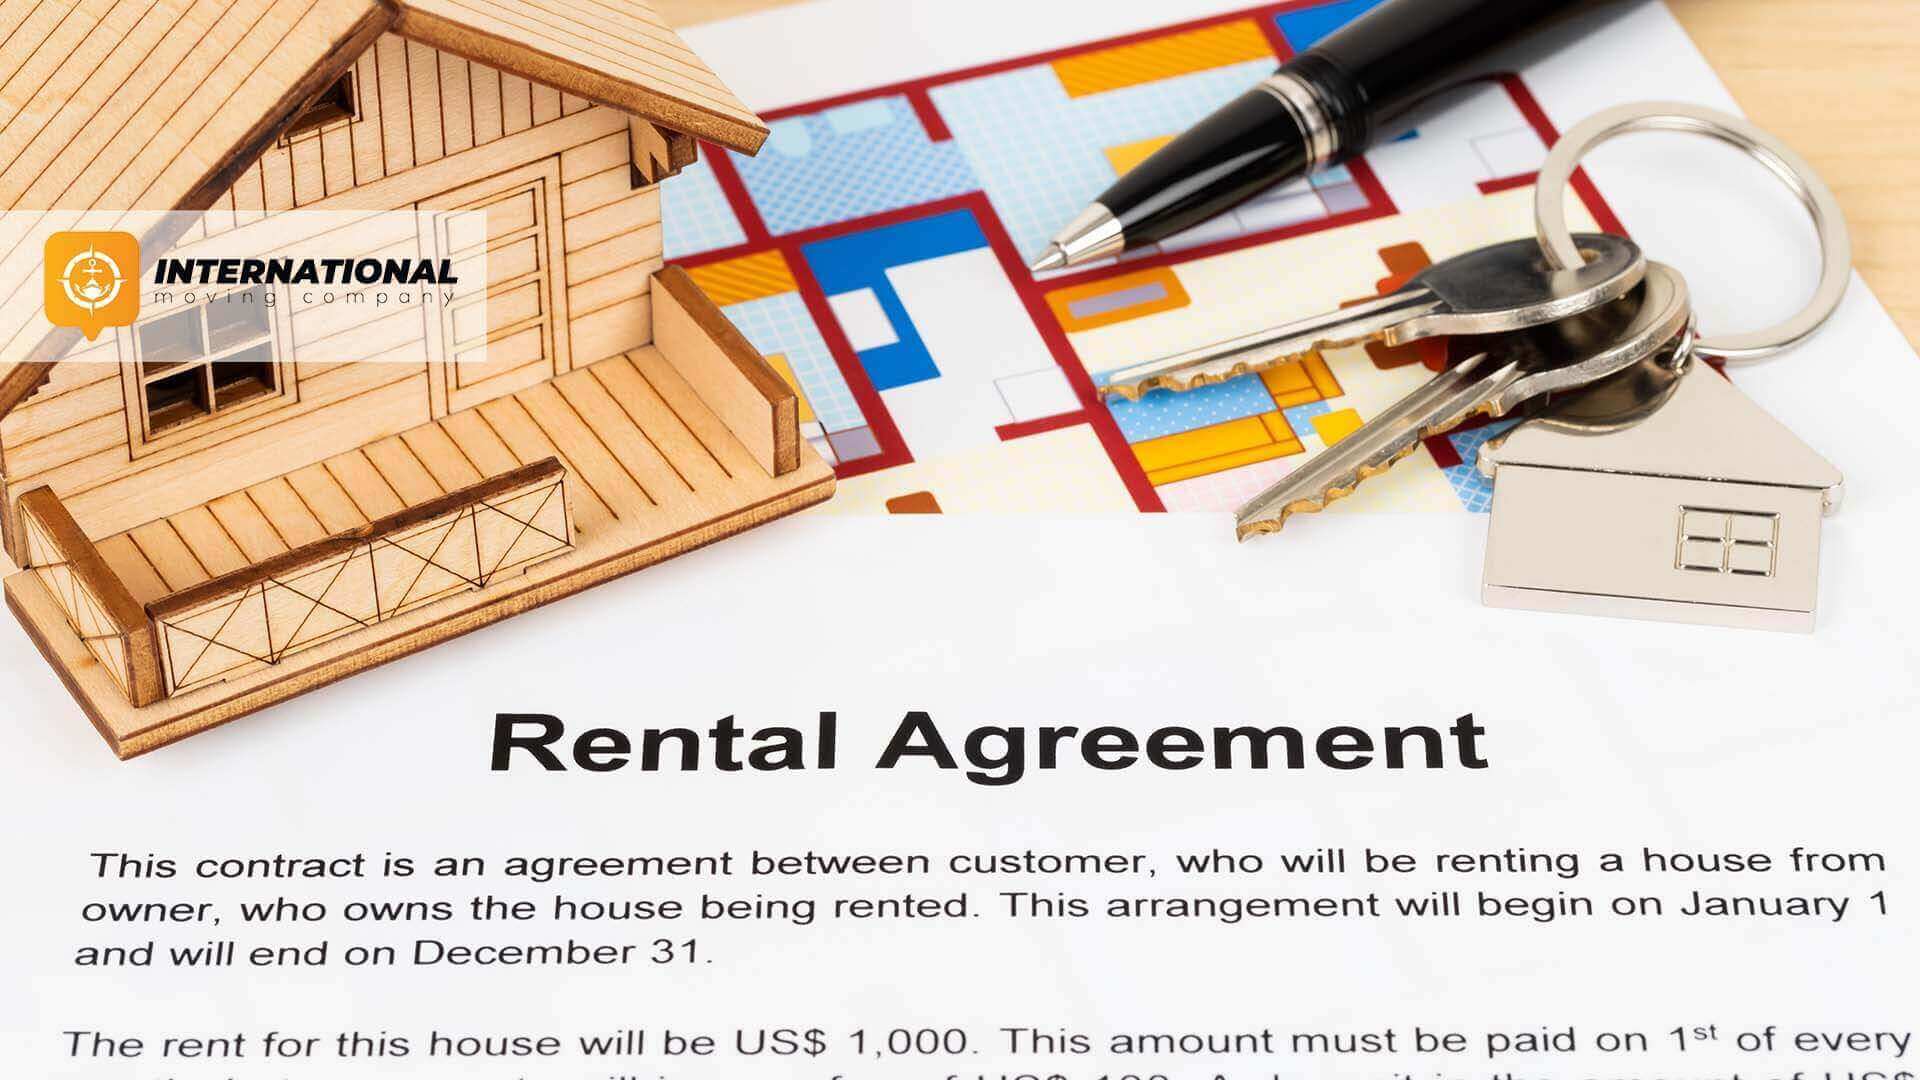 Rental agreement, International Moving Company Logo